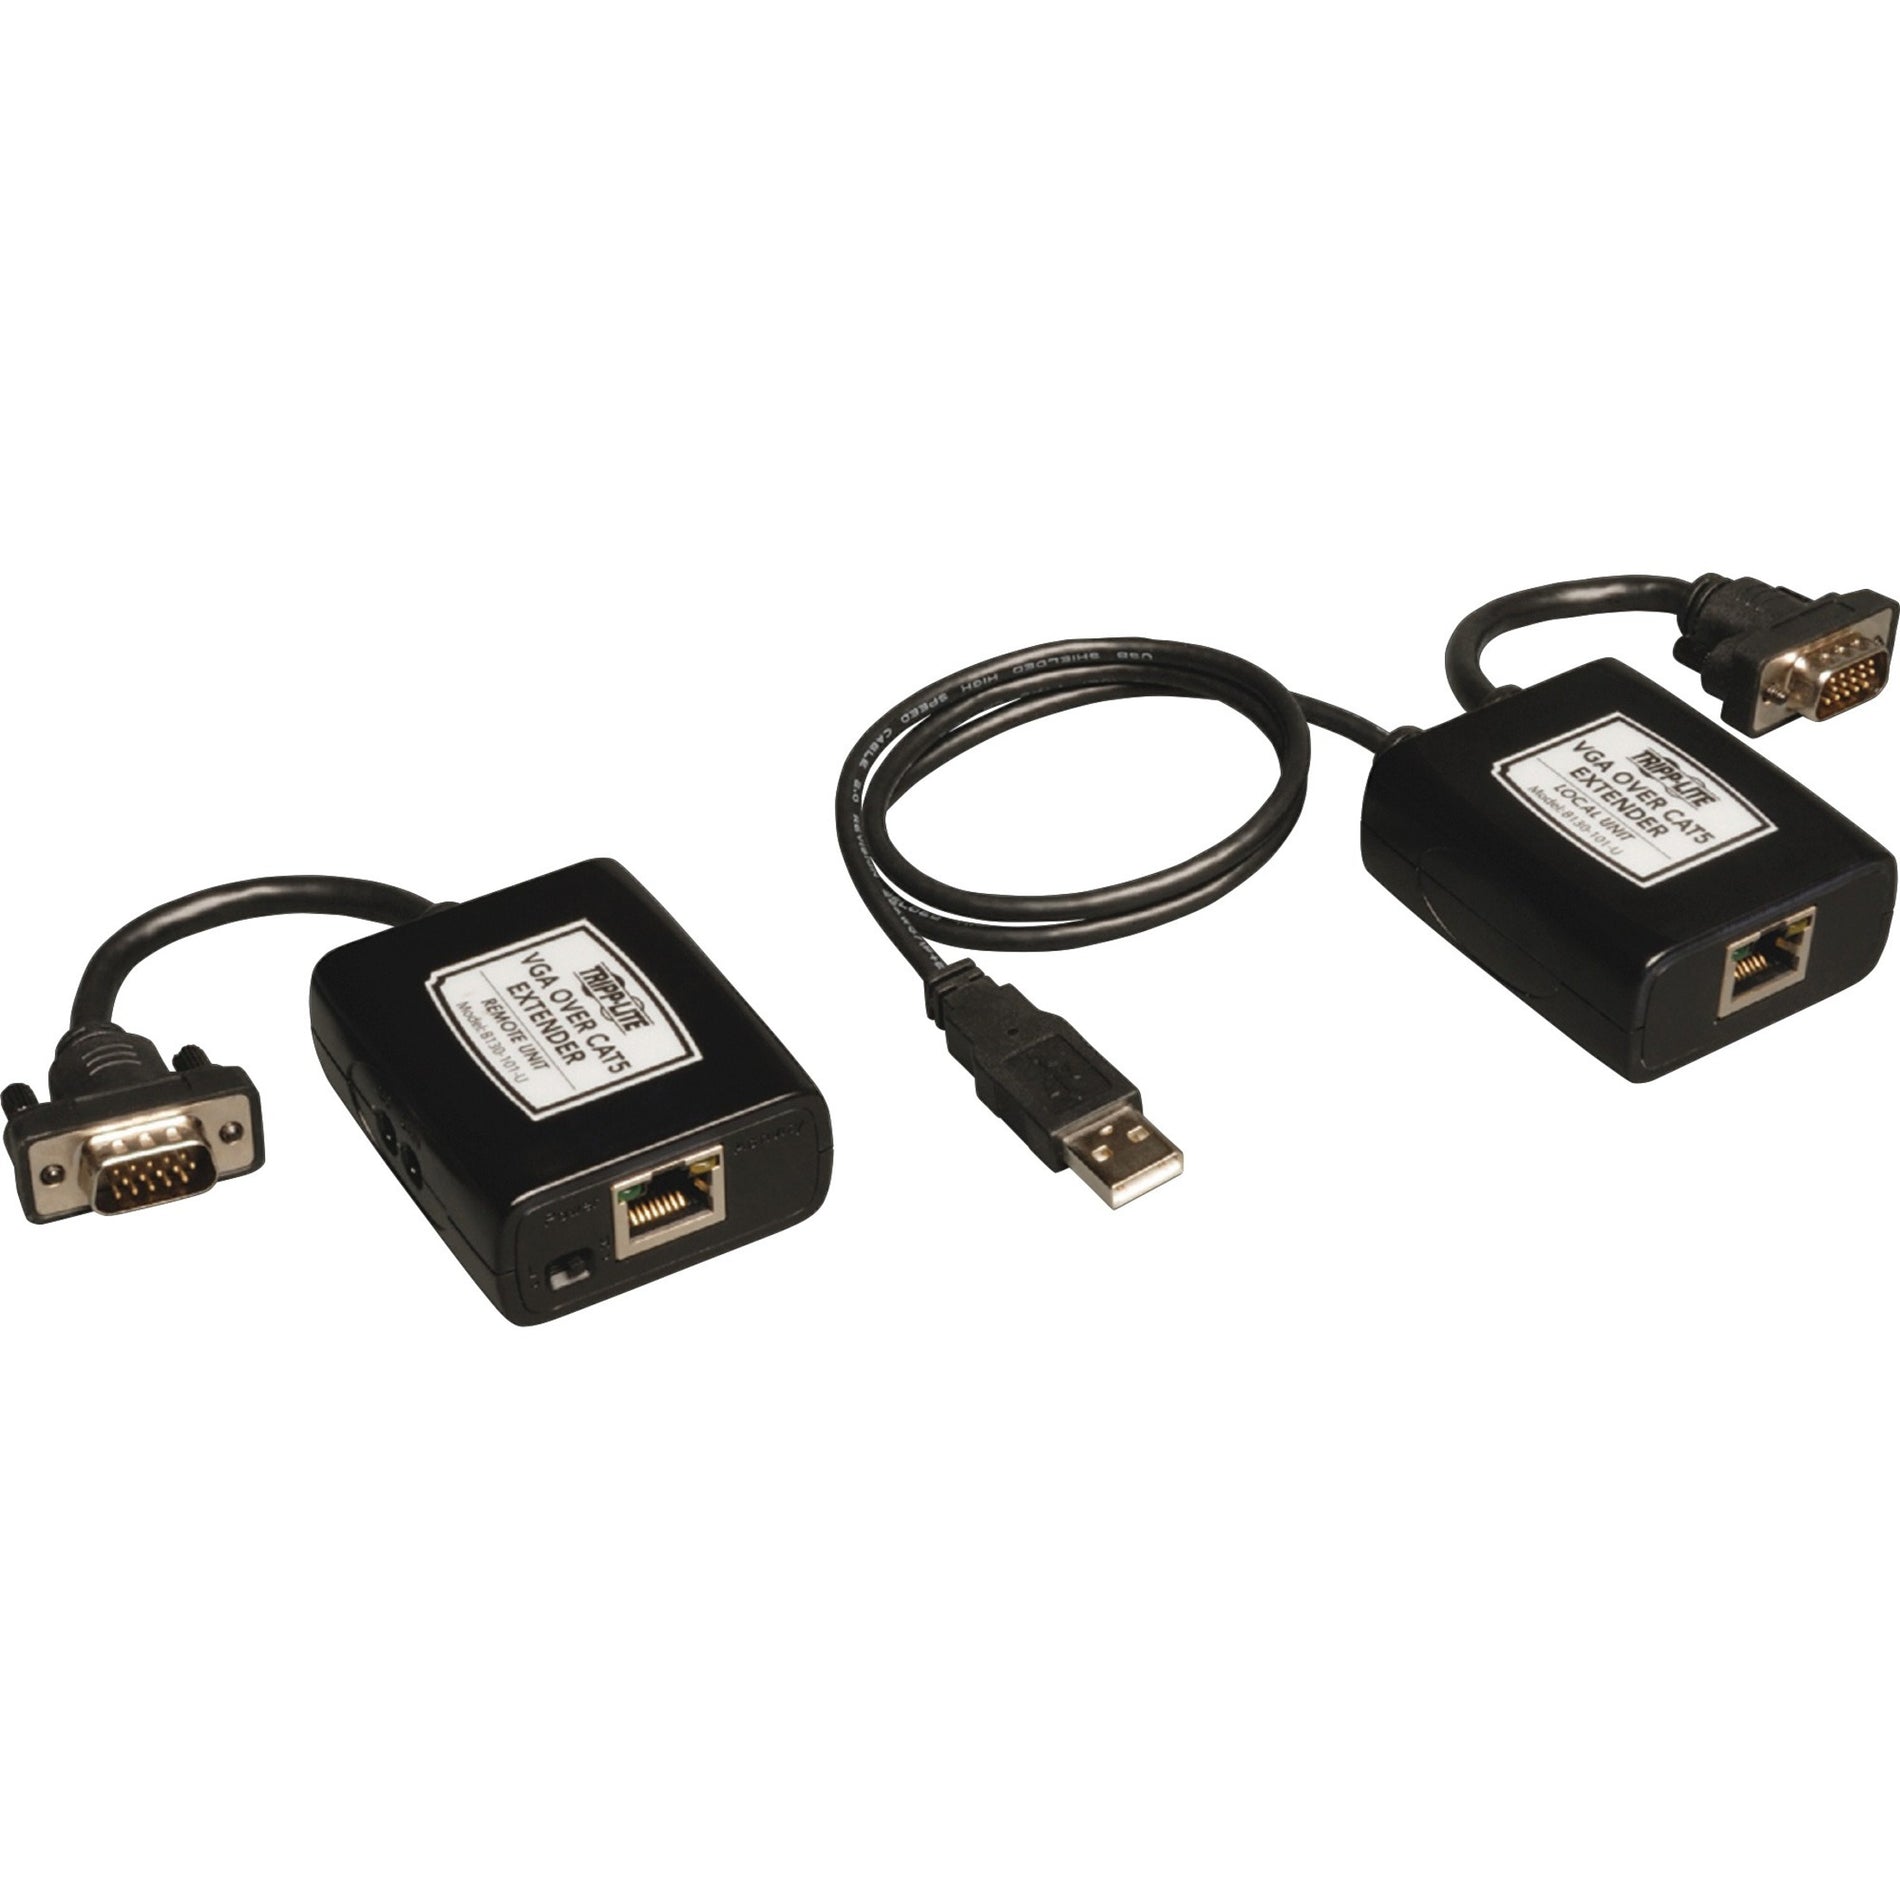 Tripp Lite B130-101-U Video Extender/Console, VGA over Cat5/Cat6, Transmitter/Receiver